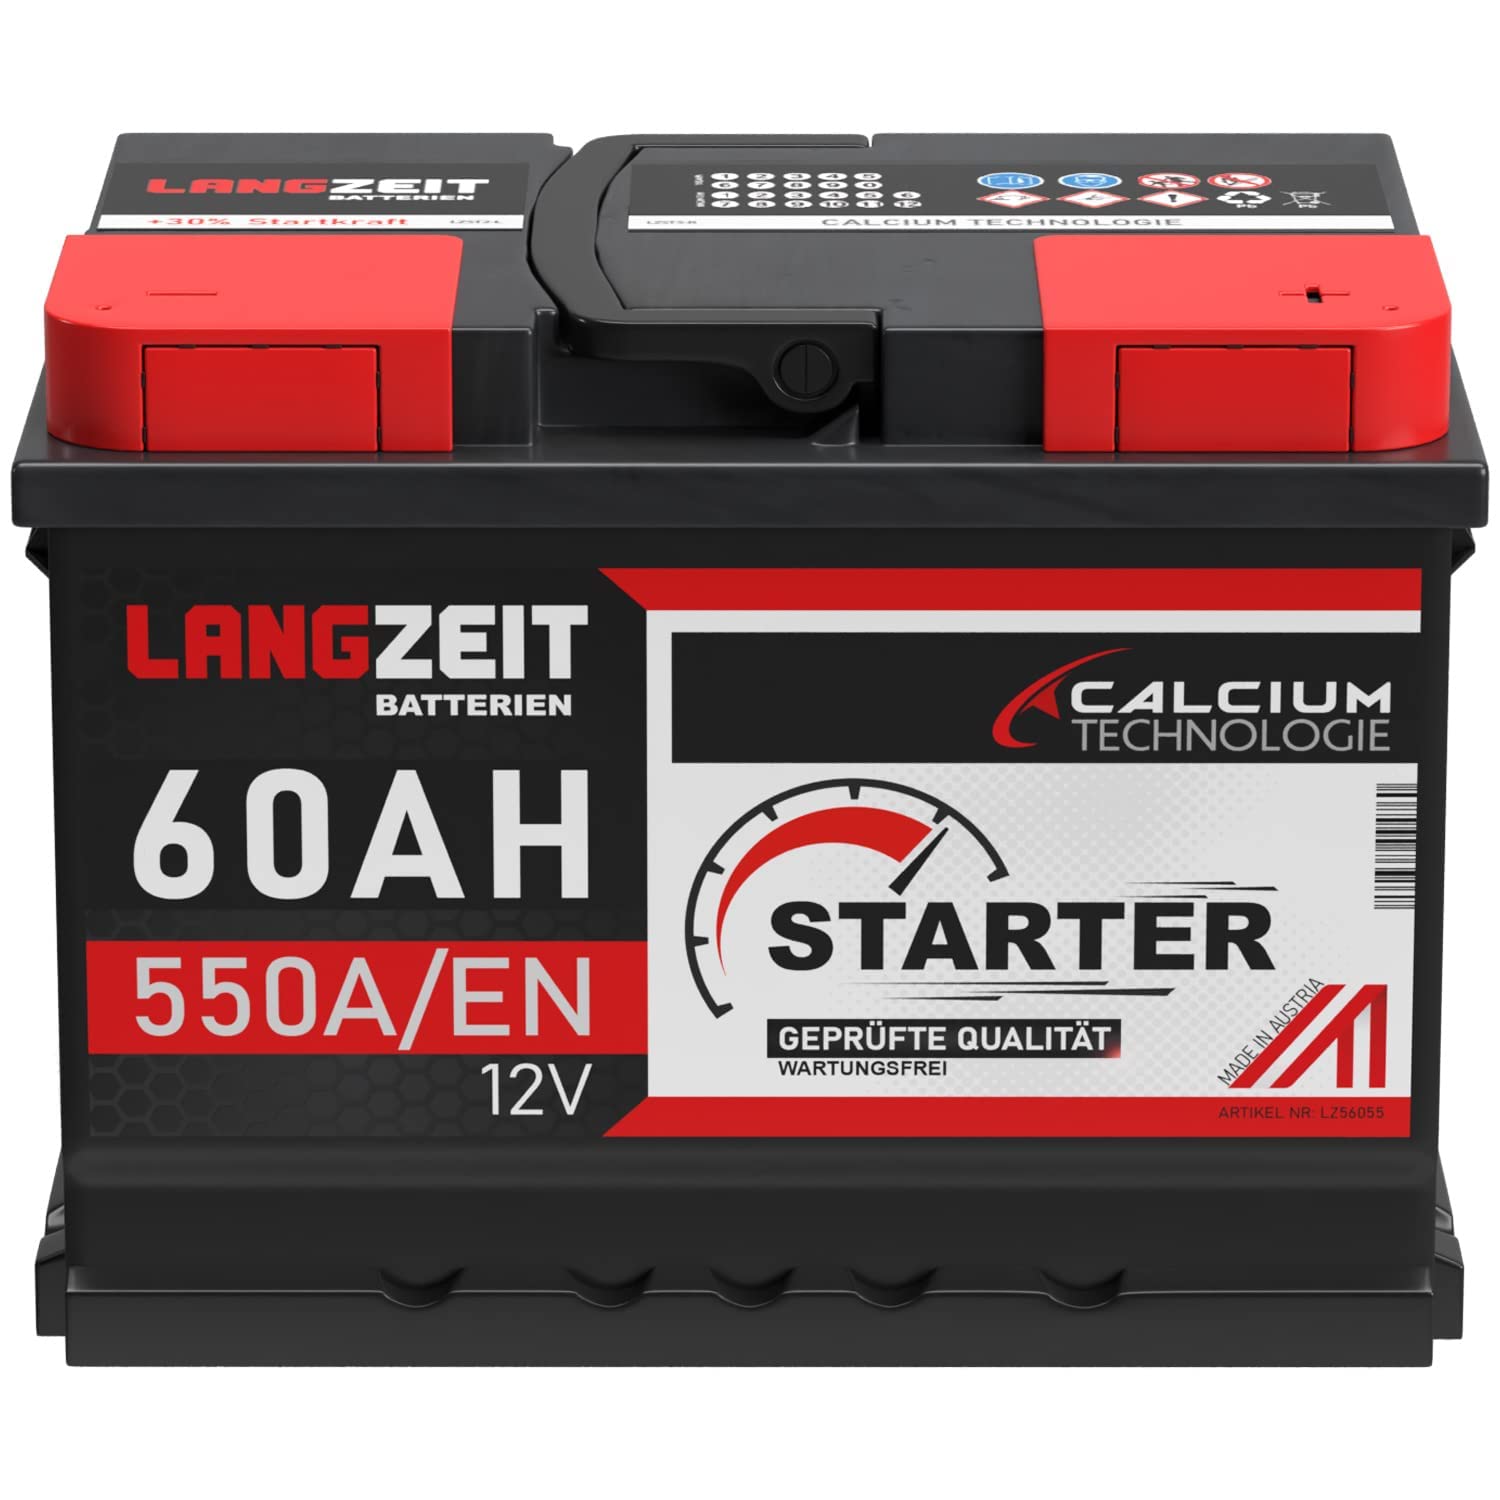 LANGZEIT lead acid, Autobatterie, Kompatibel mit PKW, 60AH 12V 550A/EN Starterbatterie +30% mehr Leistung ersetzt Batterie 55AH 53AH 54AH 56AH 61AH 62AH von LANGZEIT Batterien